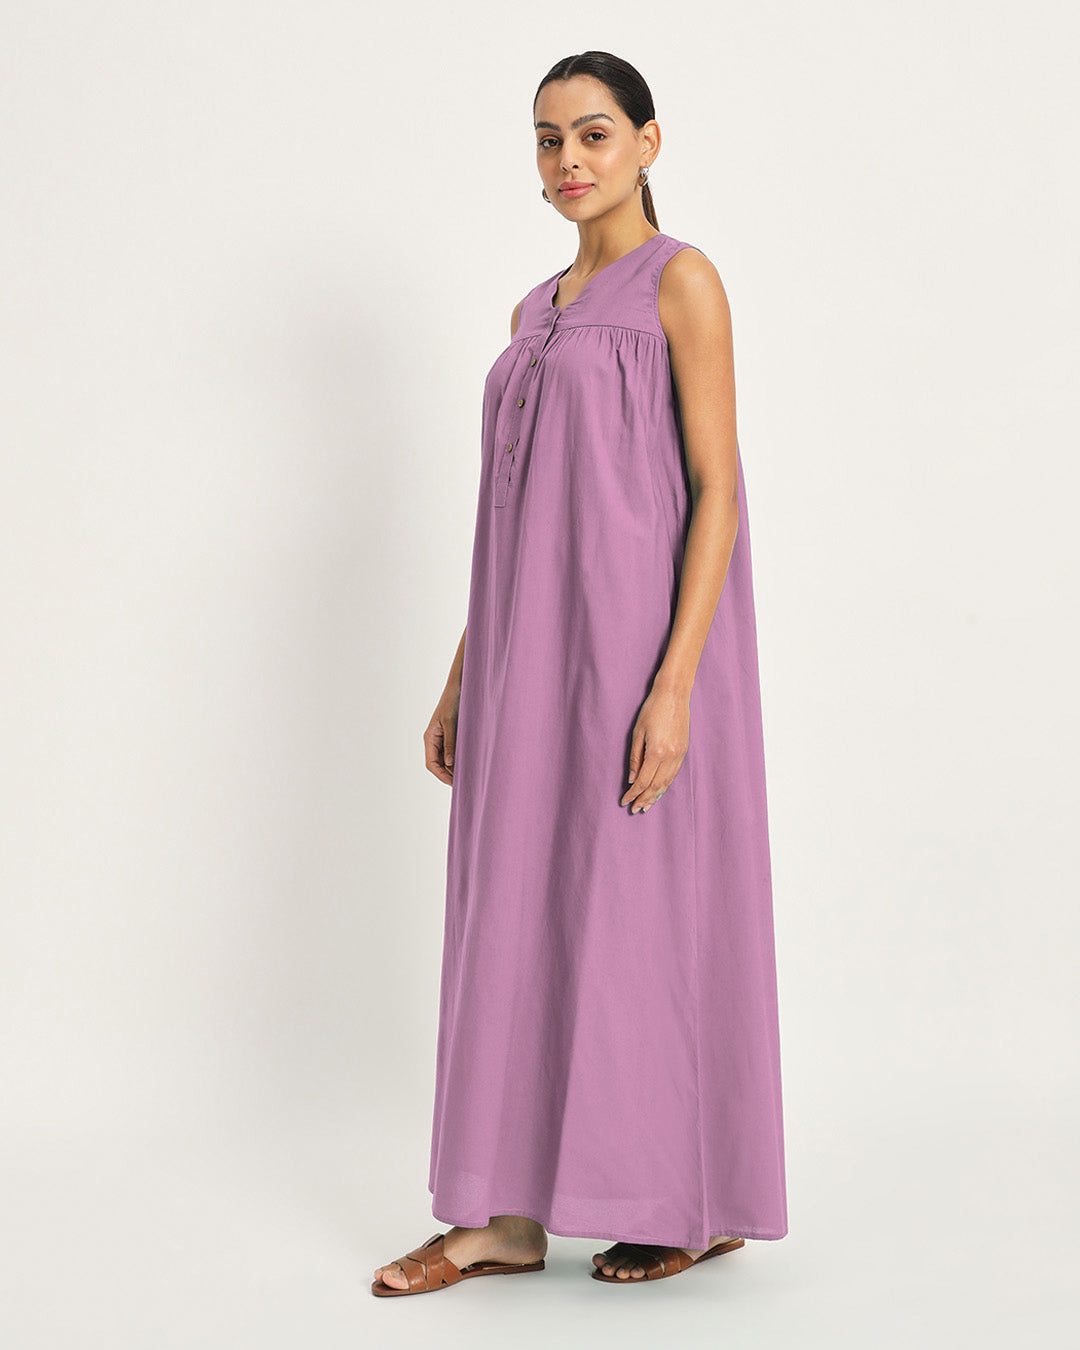 Combo: Classic Black & Iris Pink Restful Retreat Nightdress